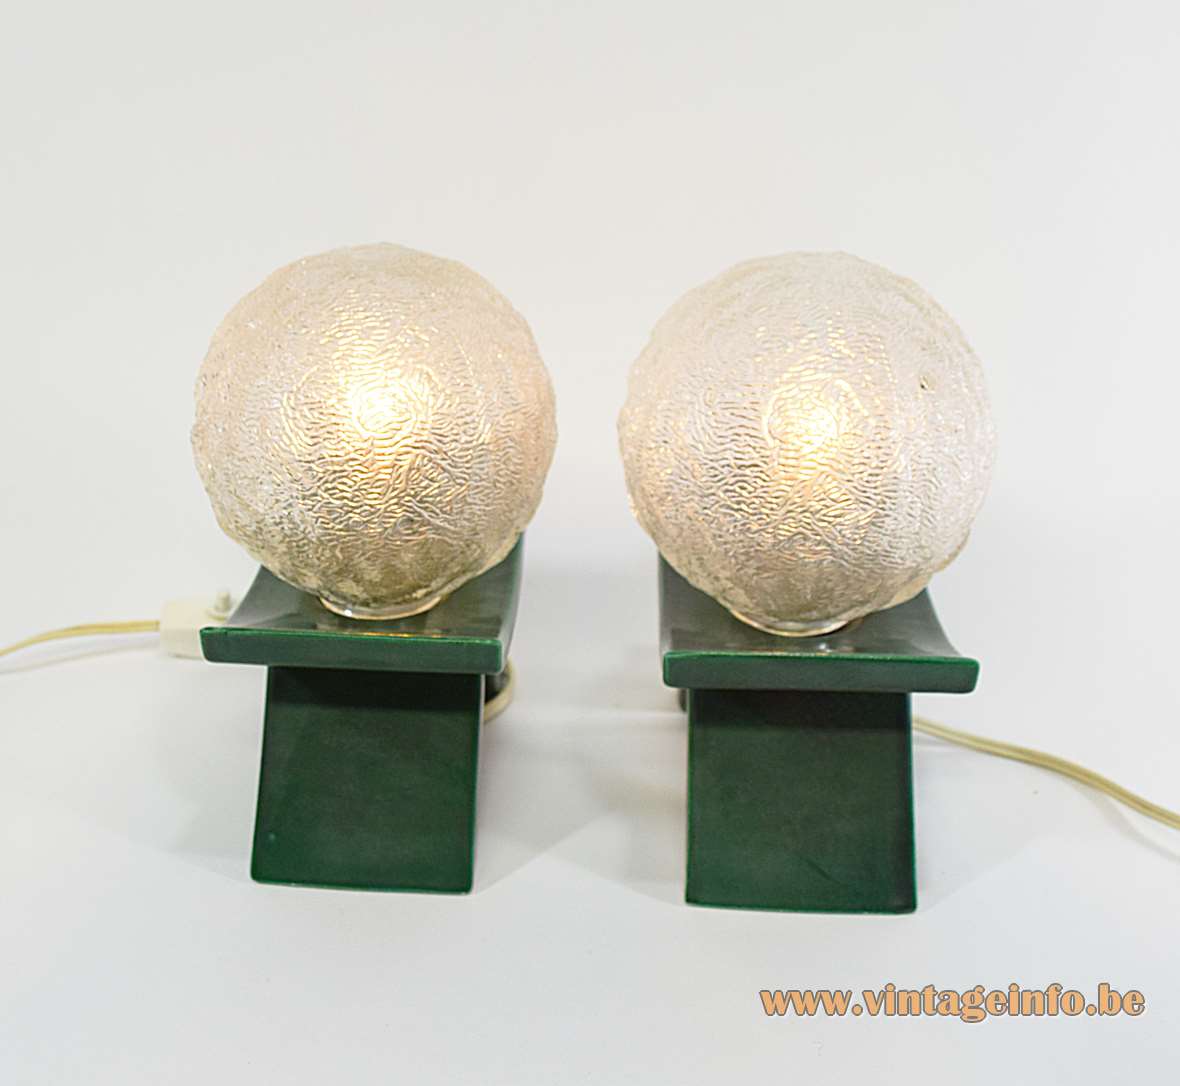 Cari Zalloni green bedside table lamps Steuler Keramik embossed glass globes 1960s 1970s Germany E14 socket